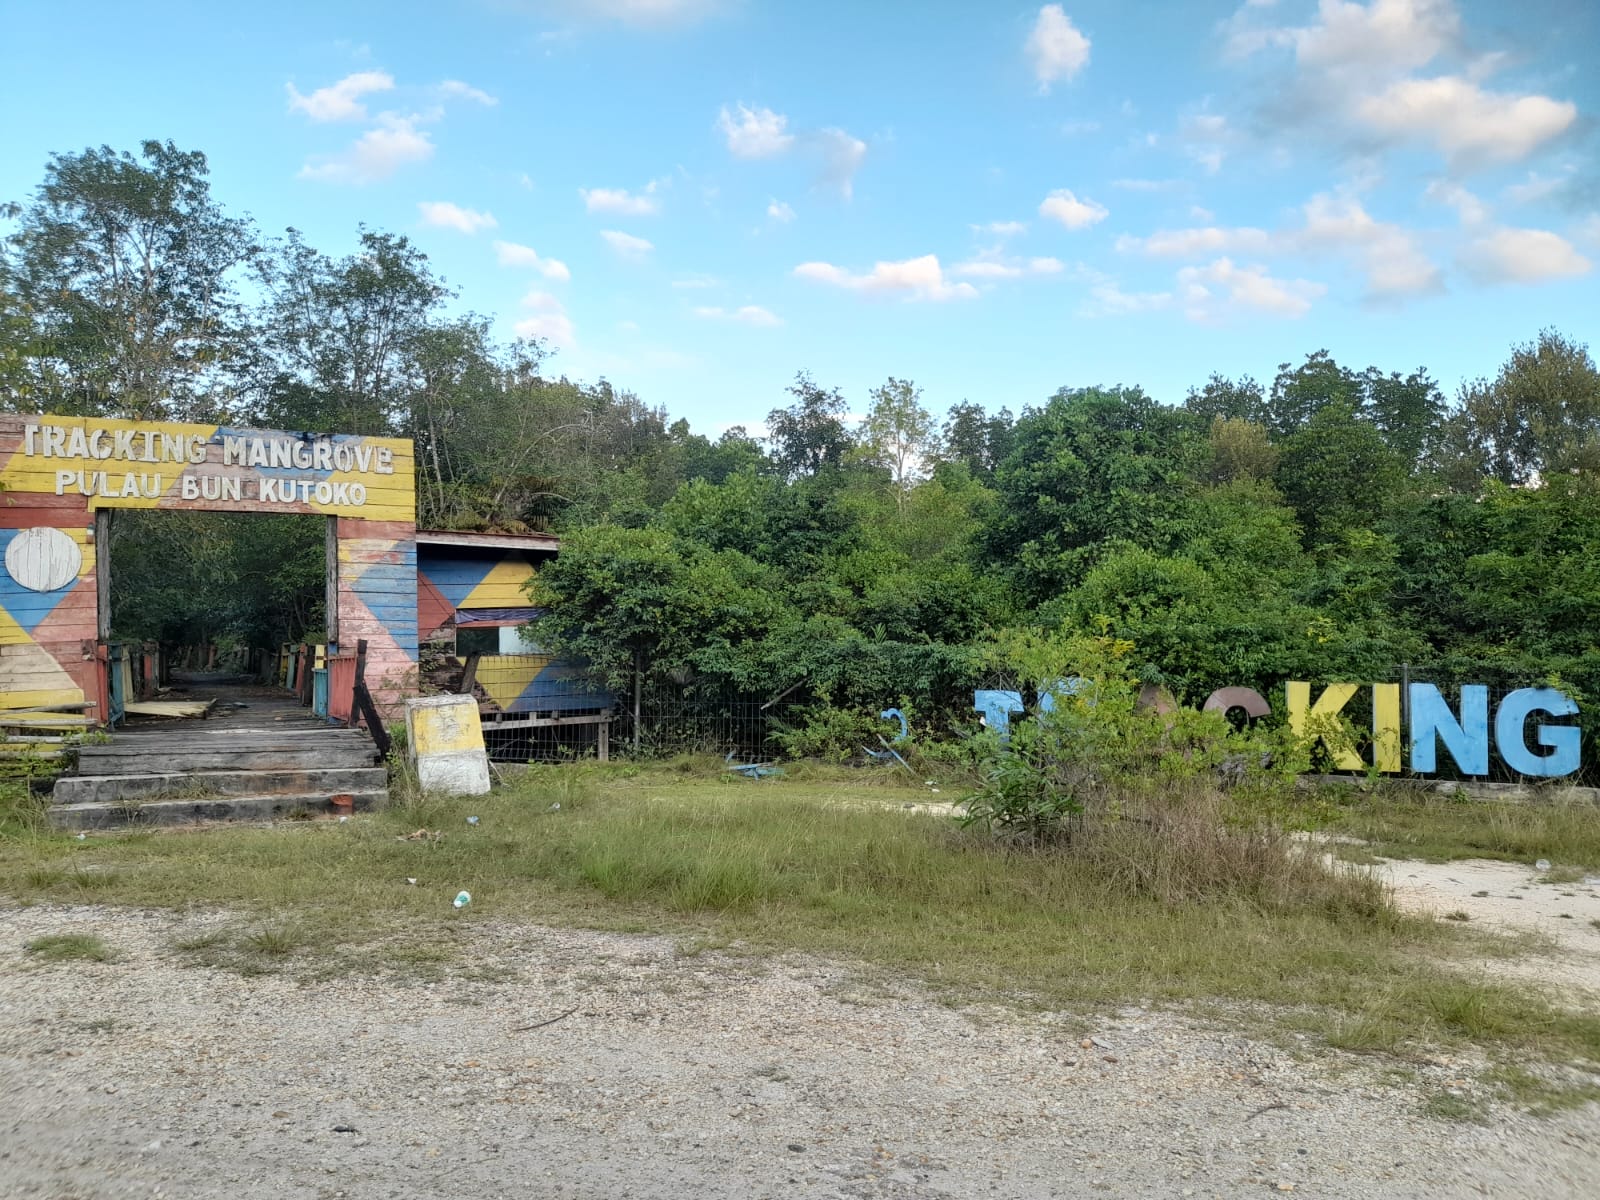 Potret Wisata Mangrove Bungkutoko yang Kini Terabaikan